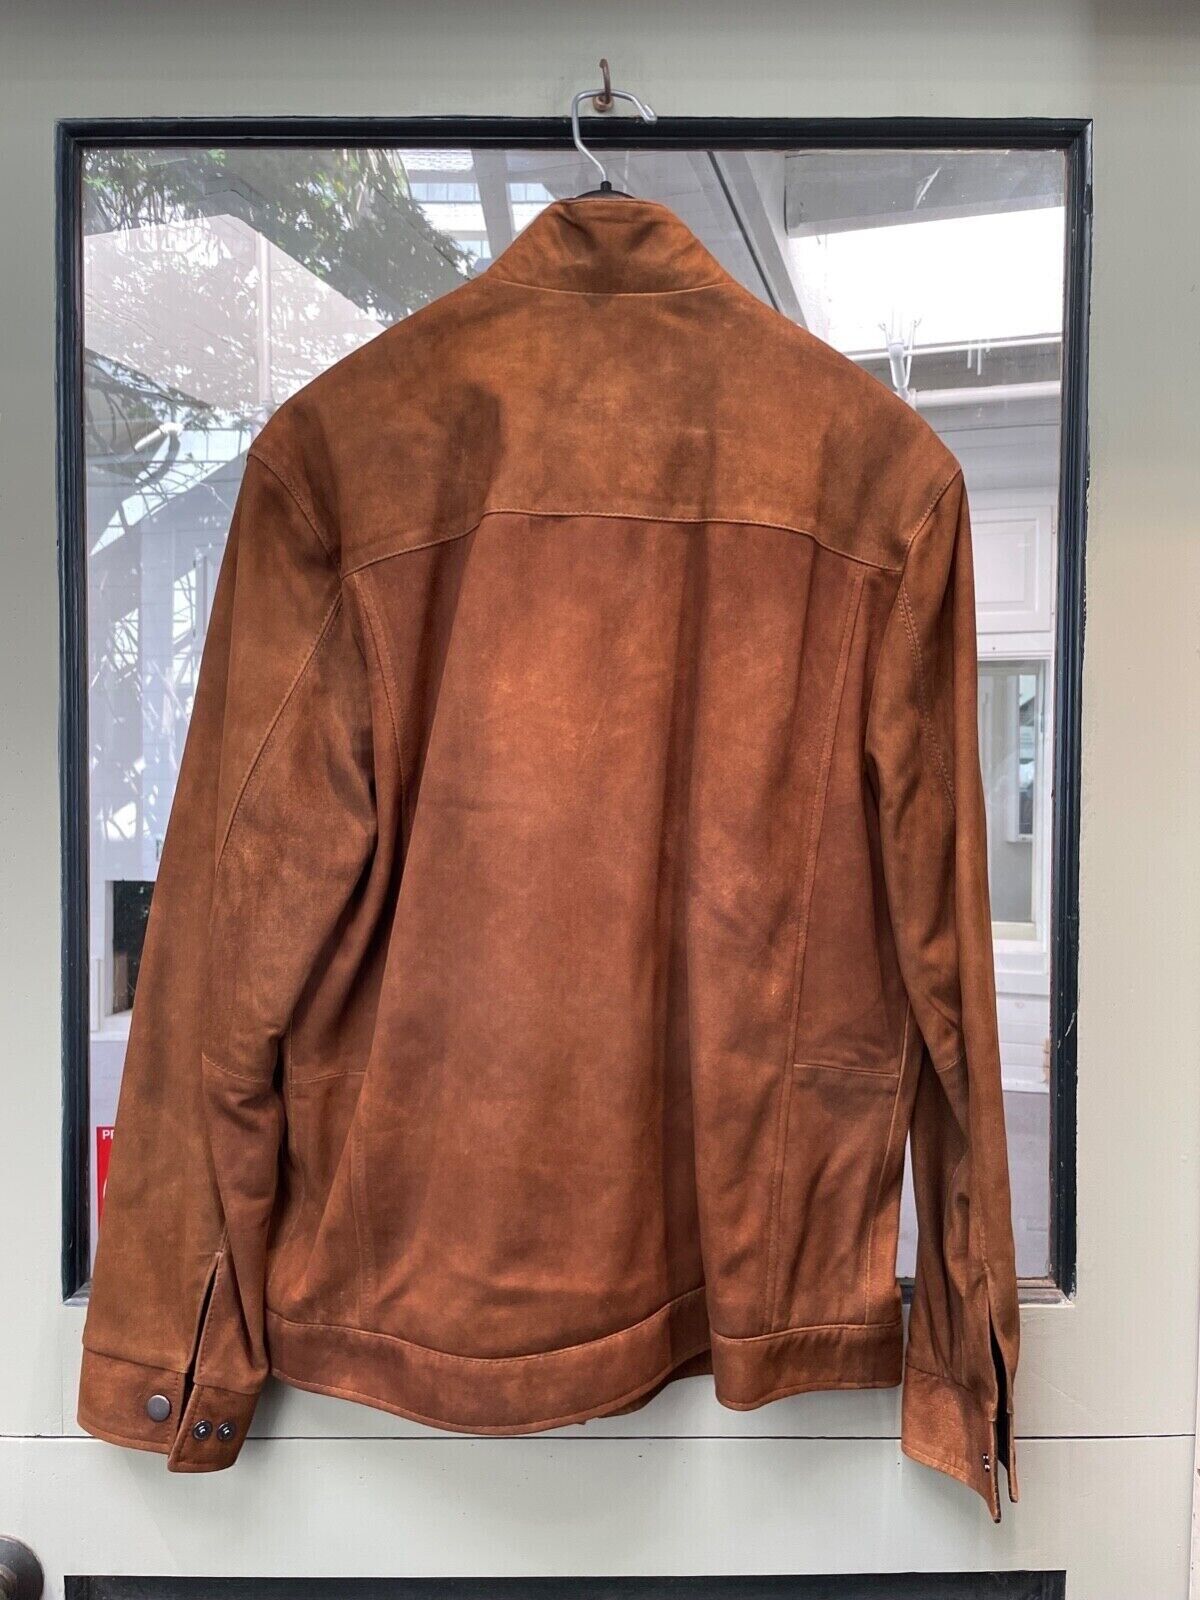 Men's Remy Leather Jacket - Distressed Lambskin